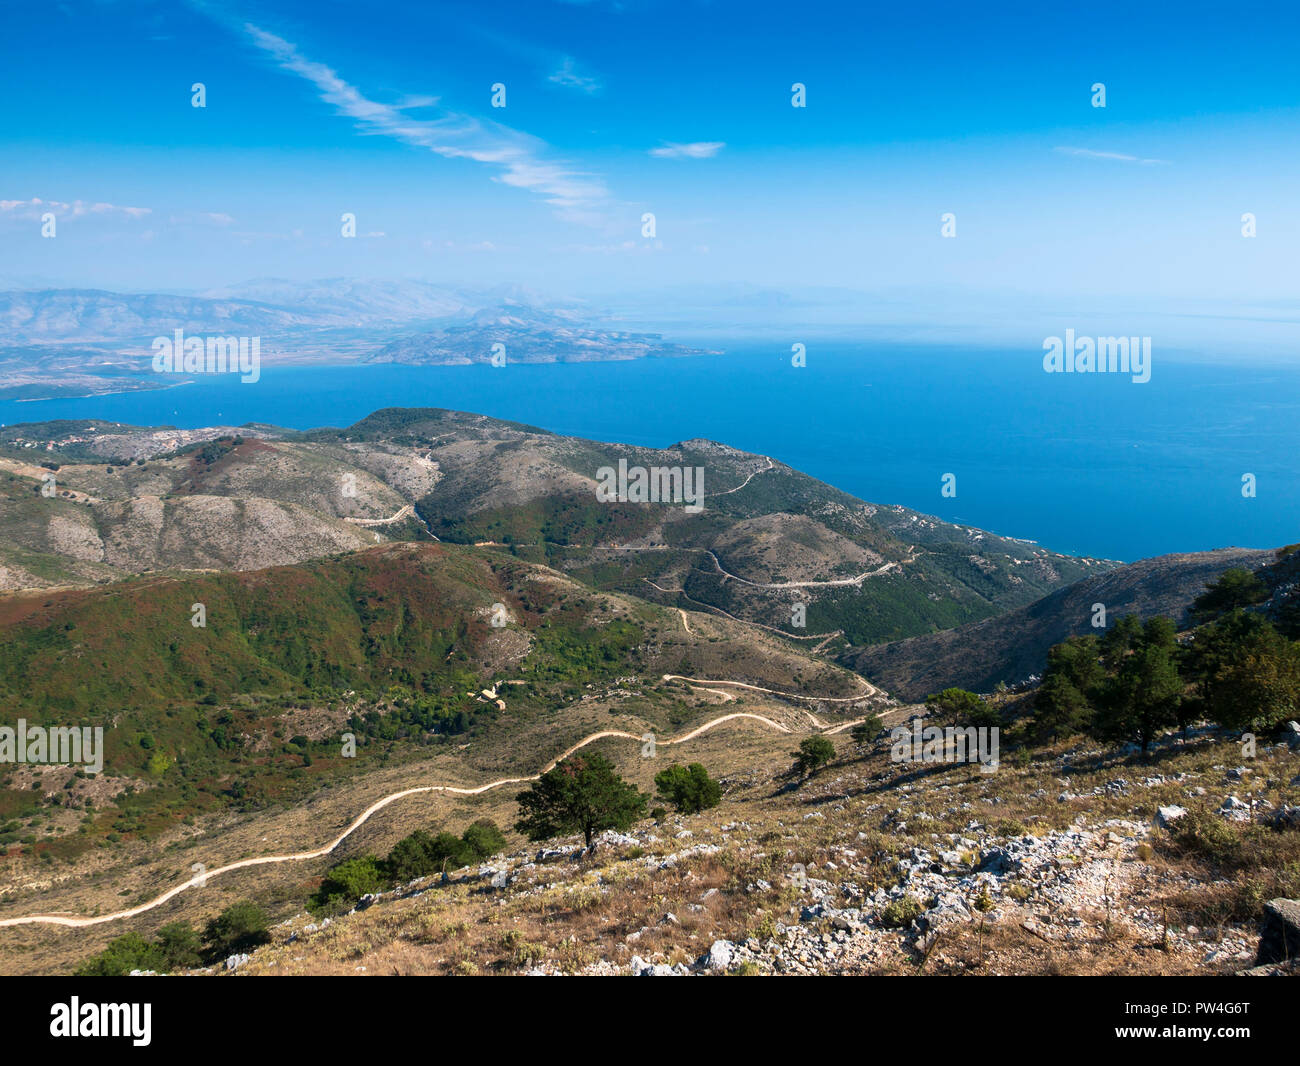 View across to Albania from Mount Pantokrator, Corfu, Ionian Islands, Greece. Stock Photo